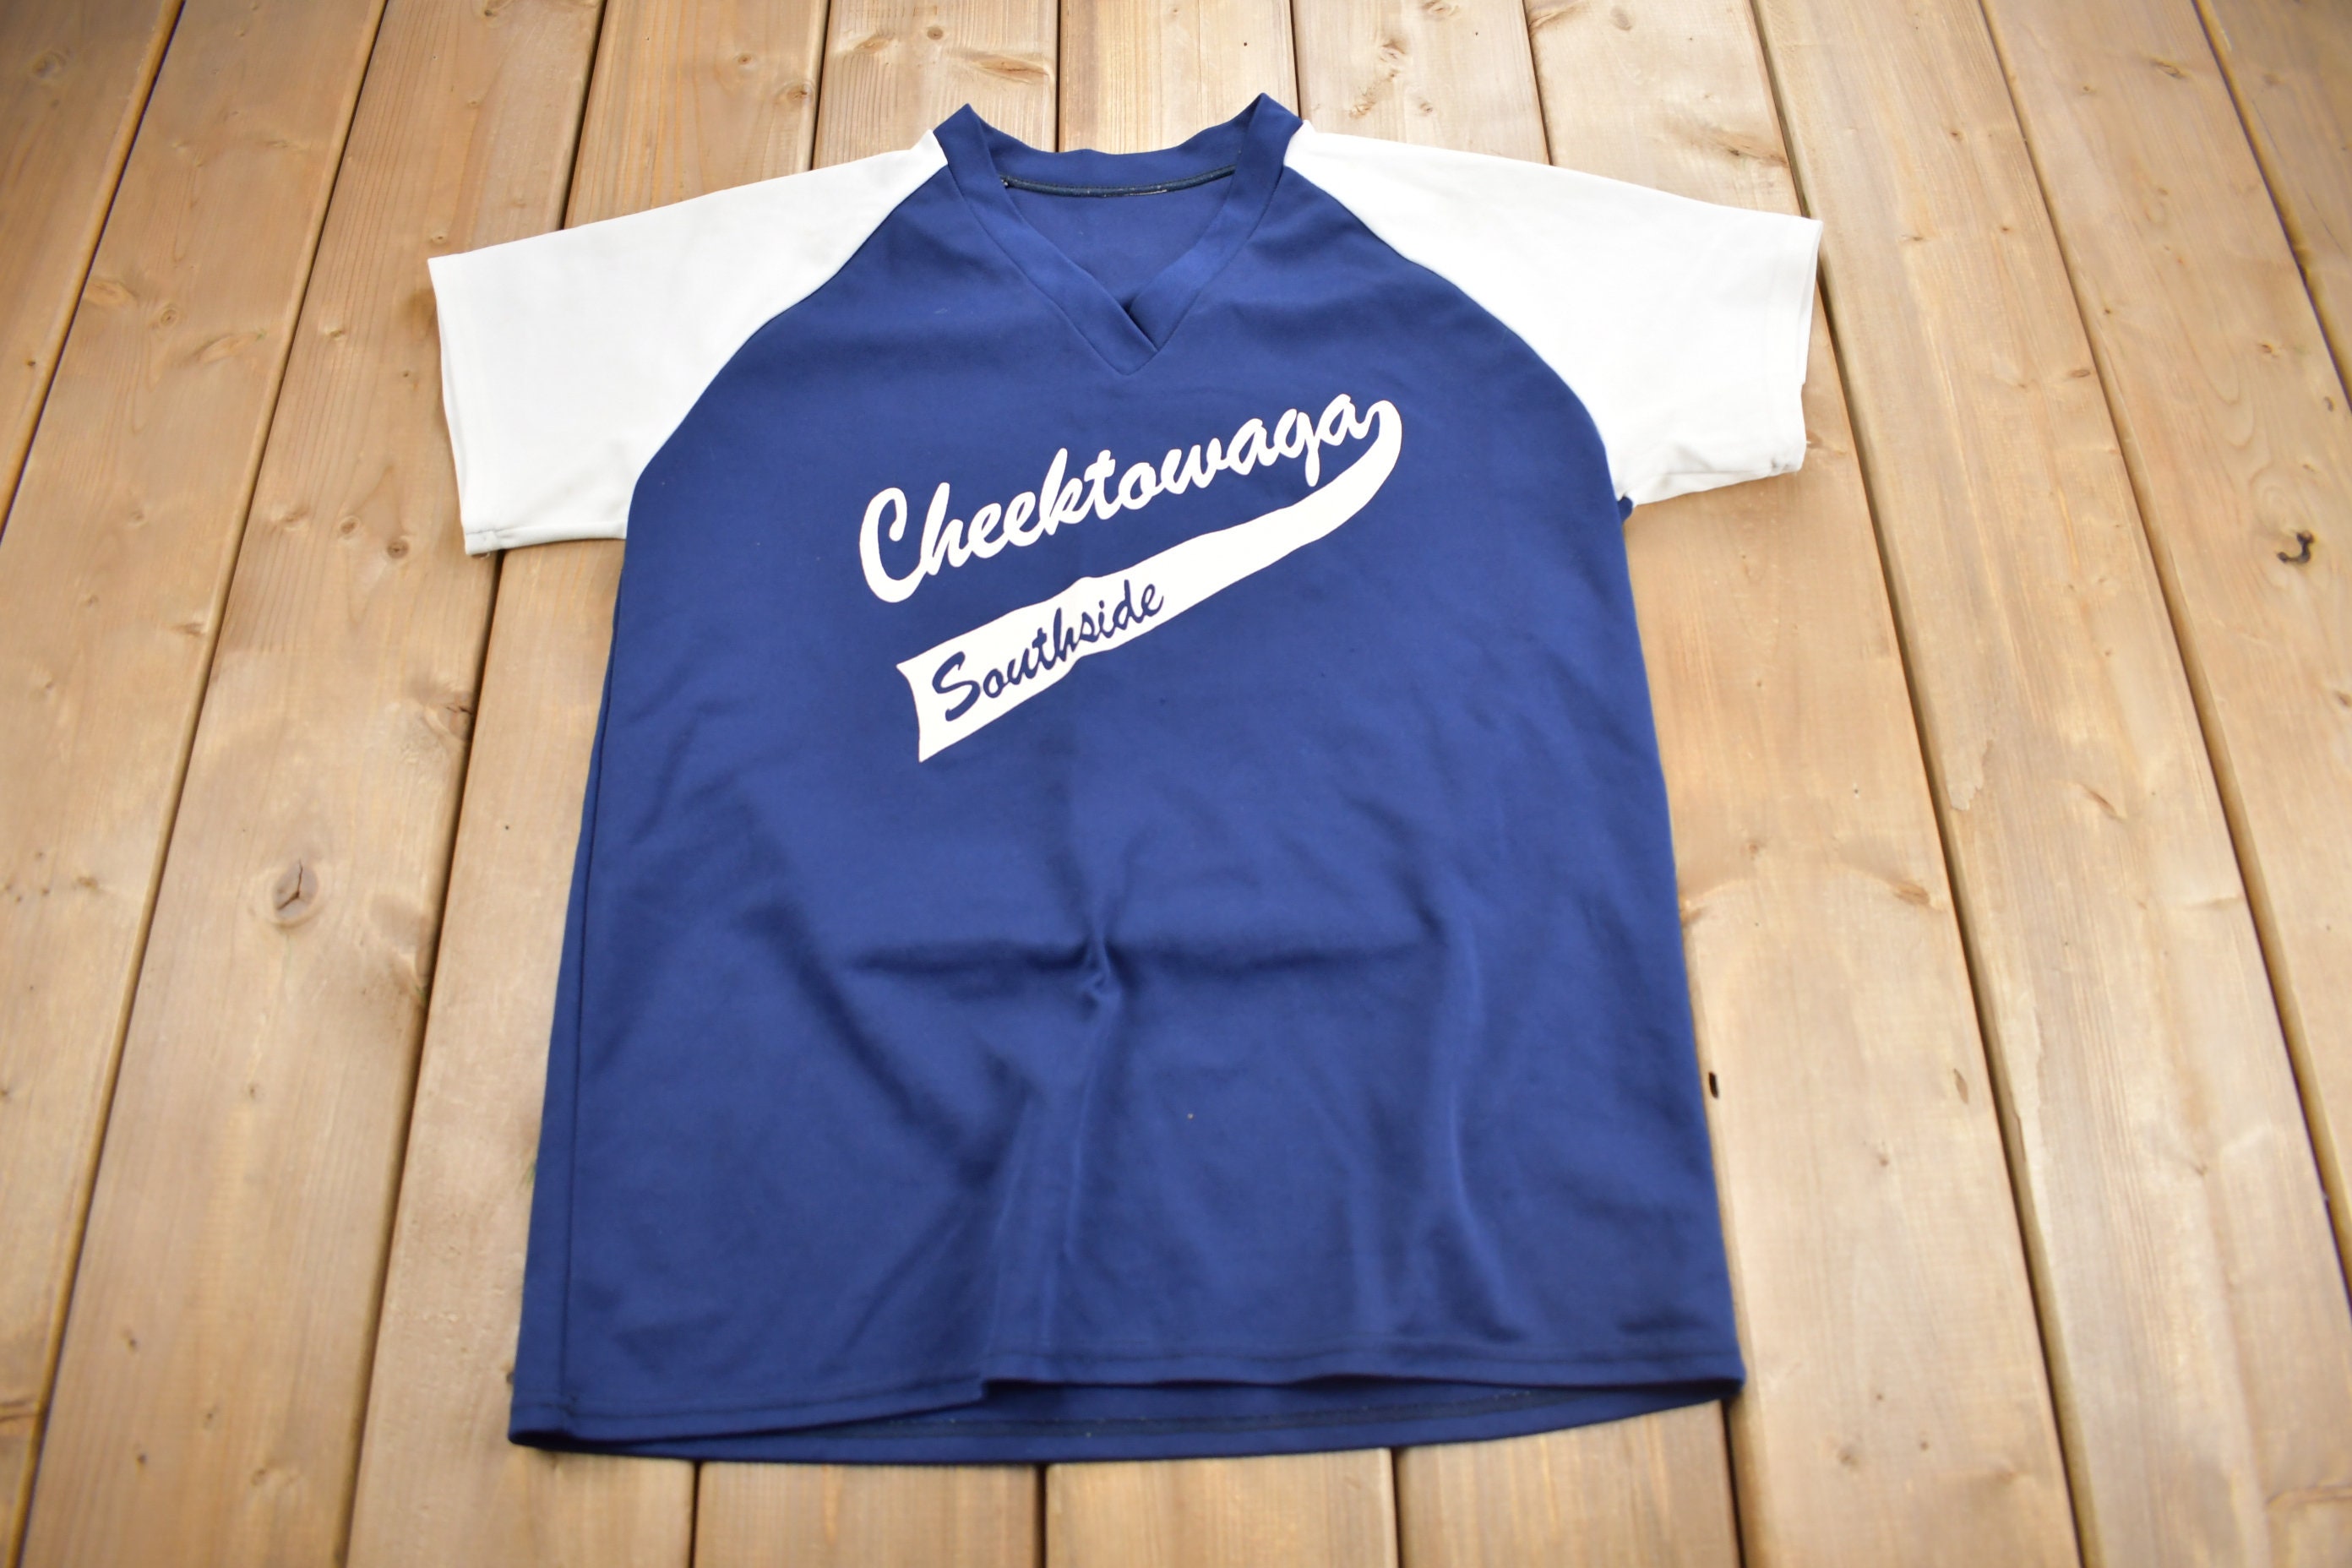 Vintage 1980s Cheektowaga Southside Jersey Style Shirt / 